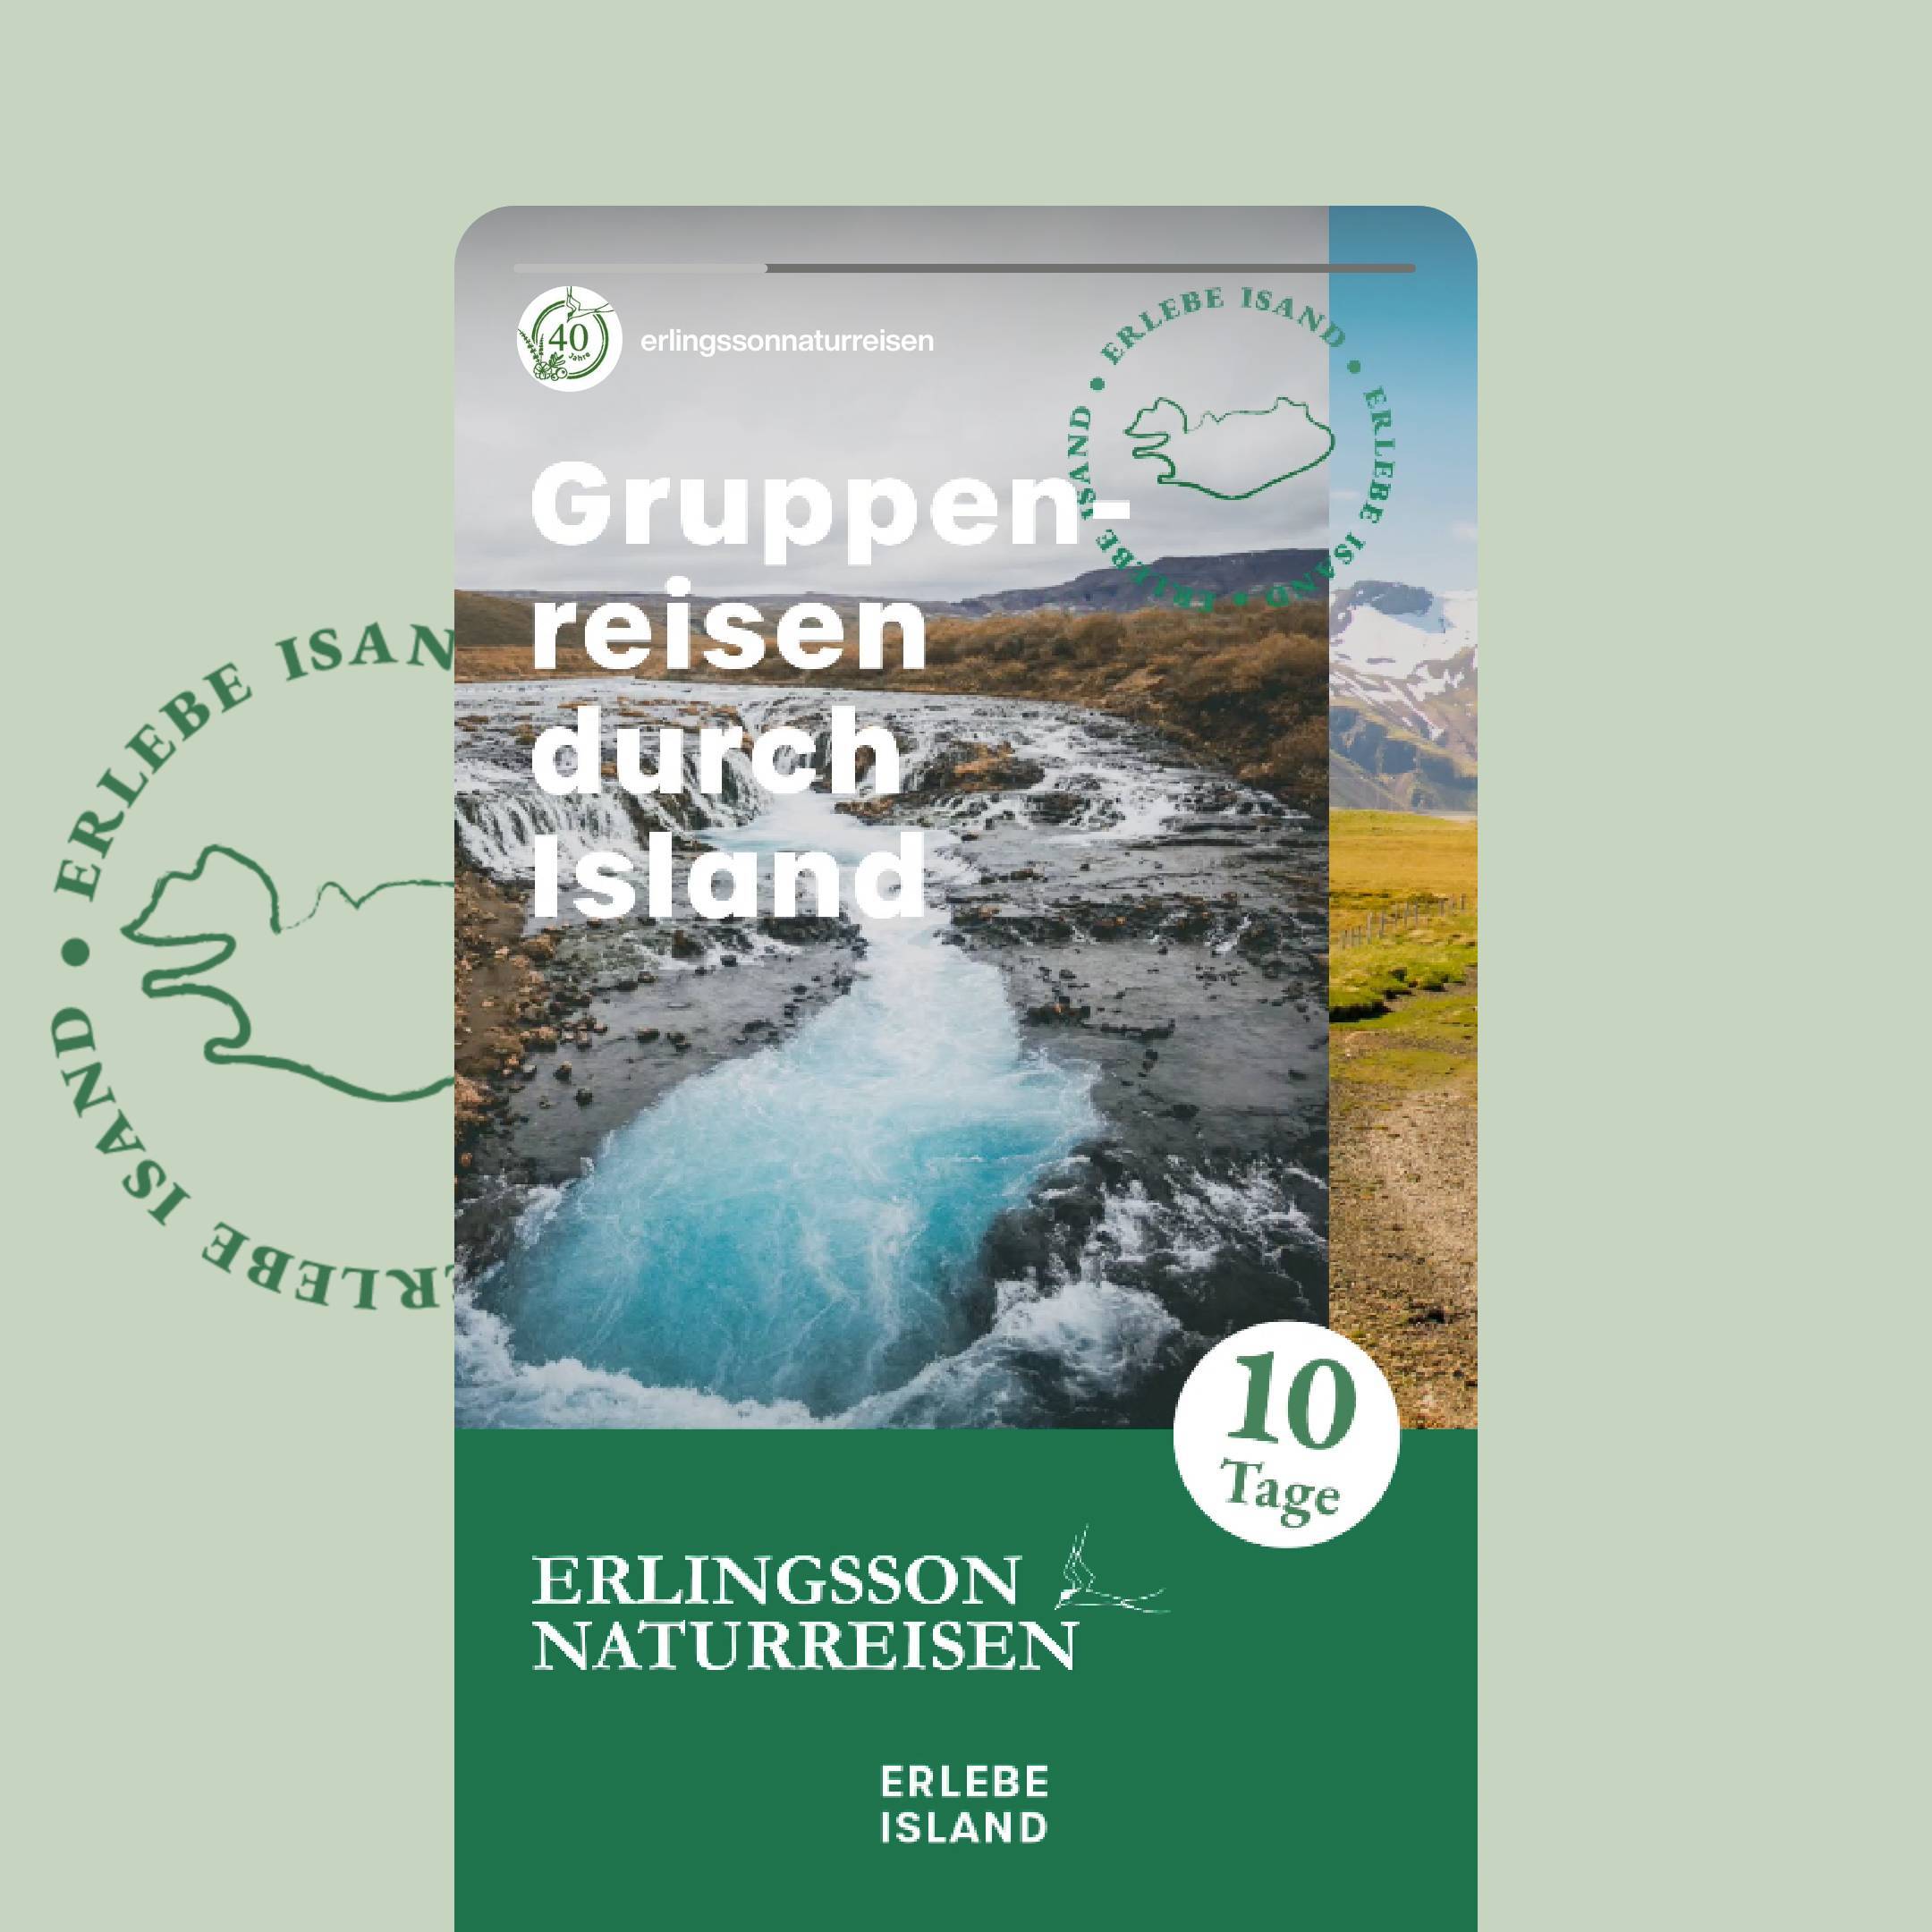 Erlingsson Nature Travel Performance Marketing